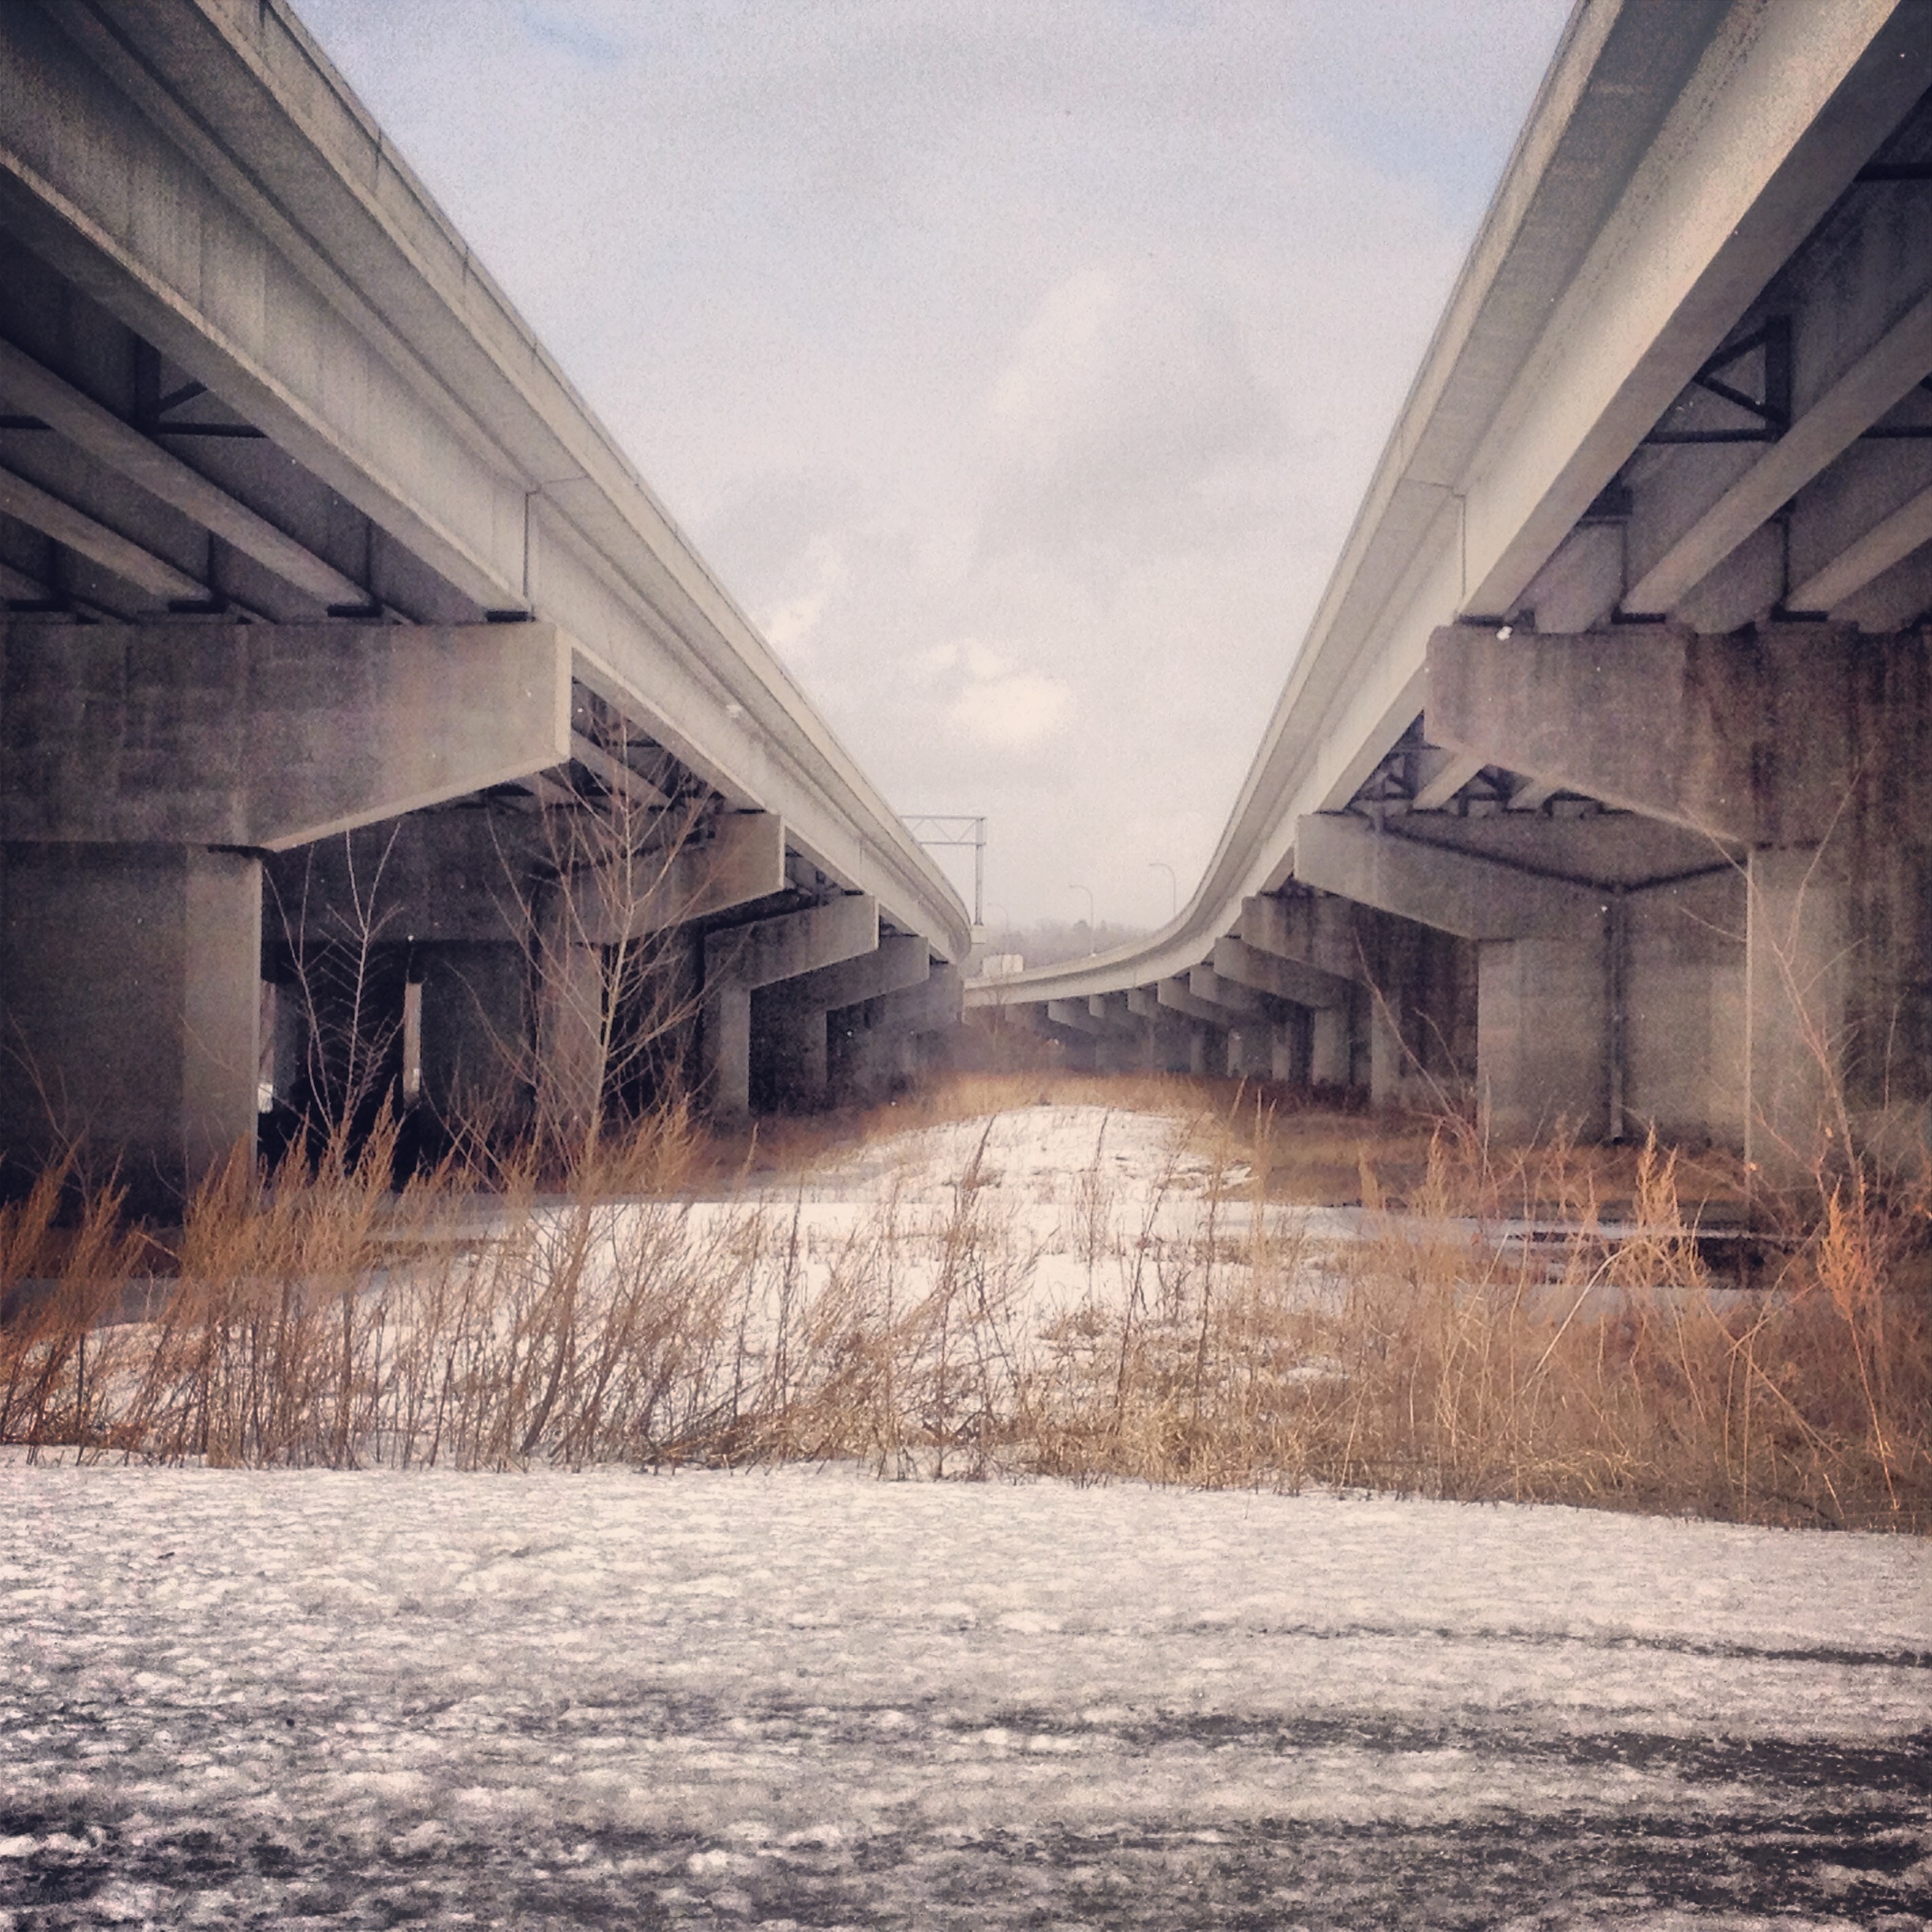 Under the Highway